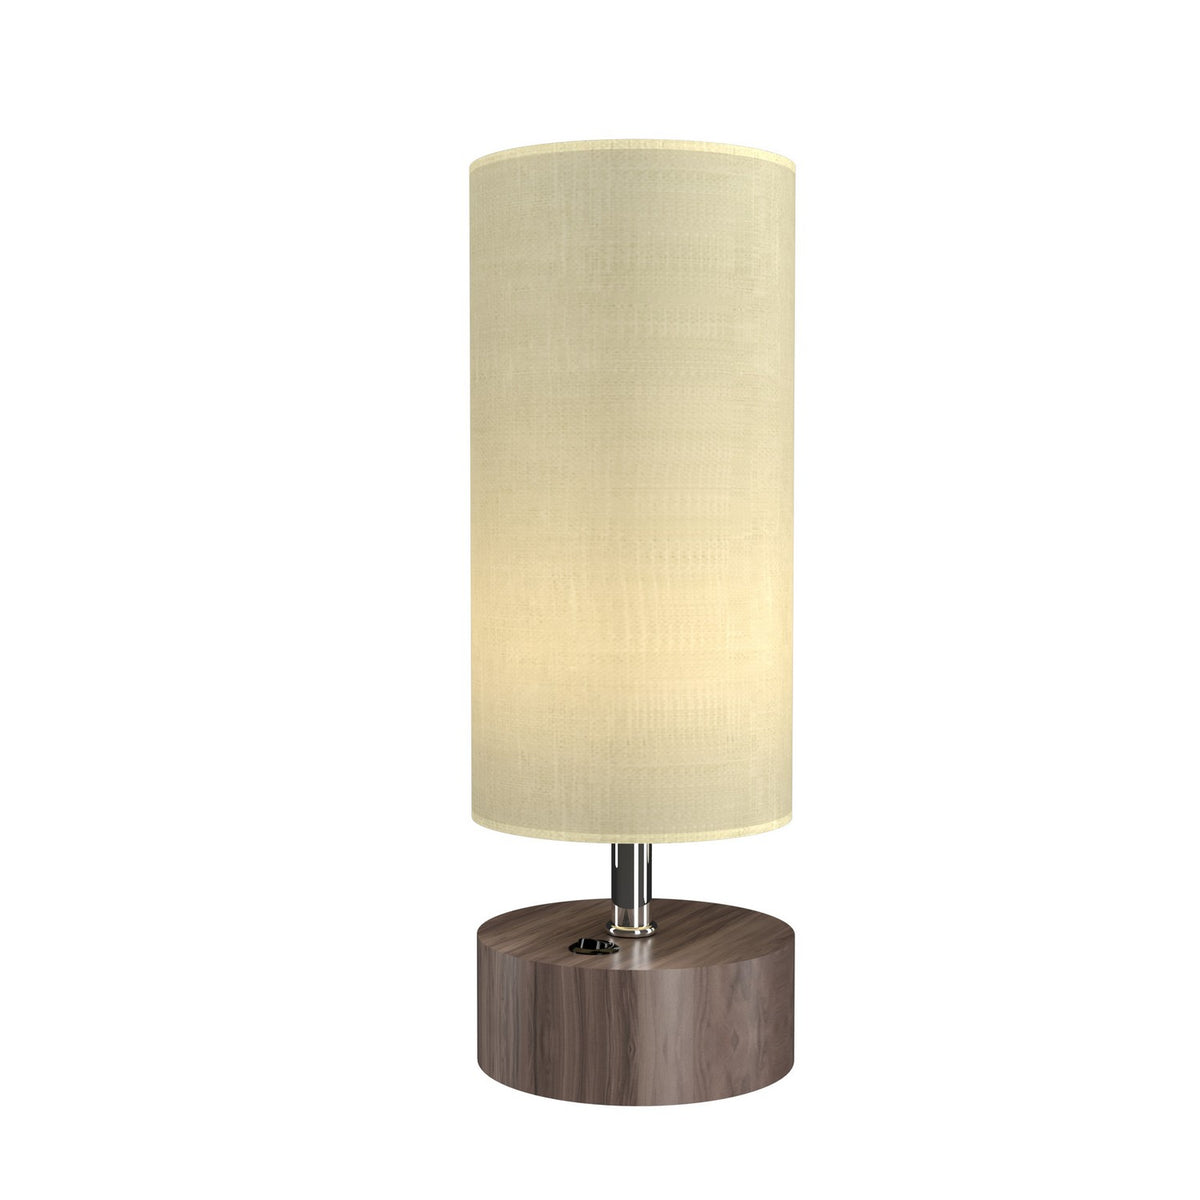 Accord Lighting - 7100.18 - LED Table Lamp - Clean - American Walnut